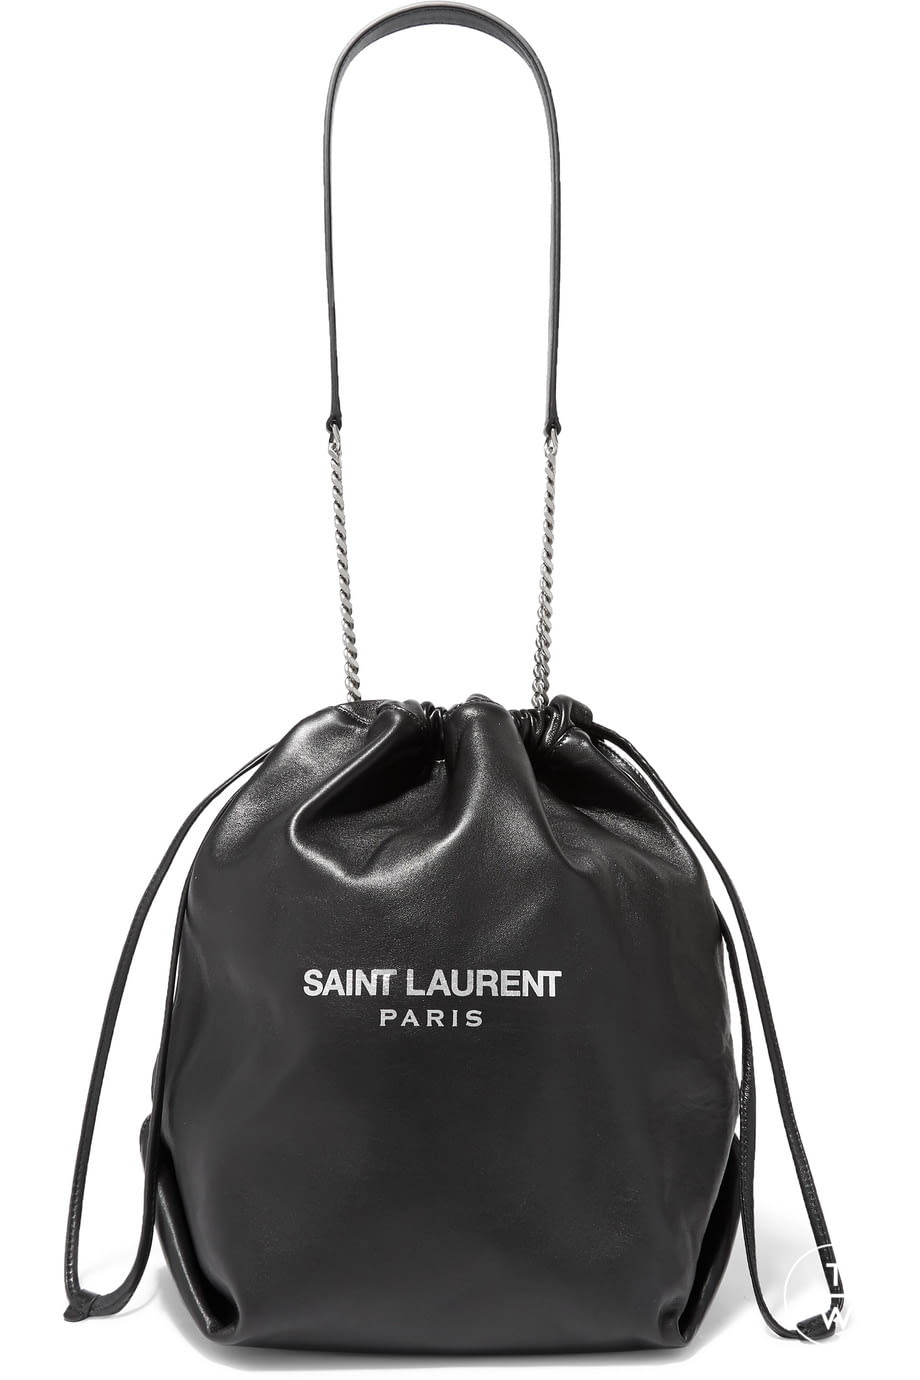 Saint Laurent, Accessories